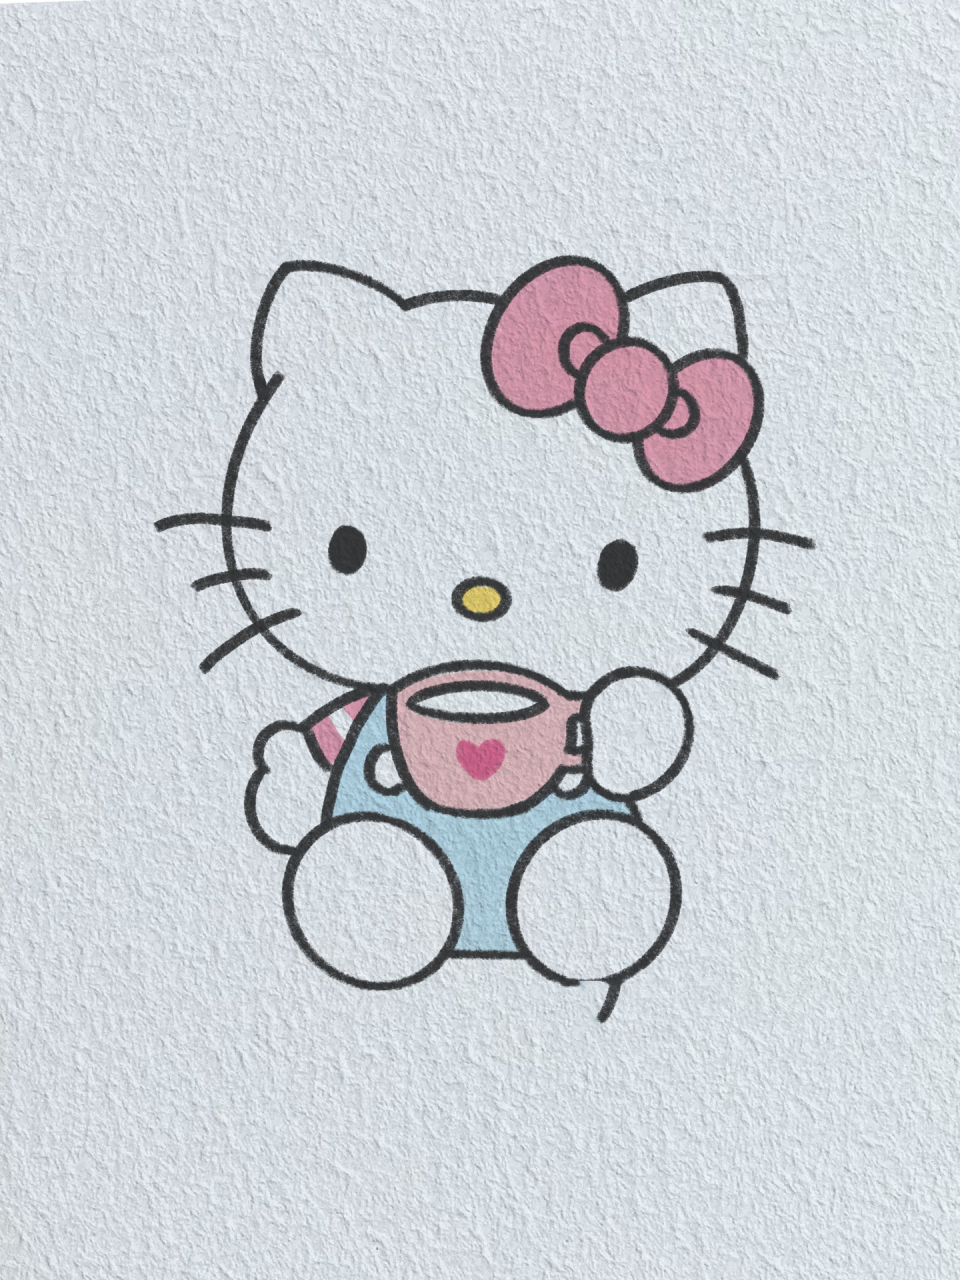 hello kitty简笔画彩色图片